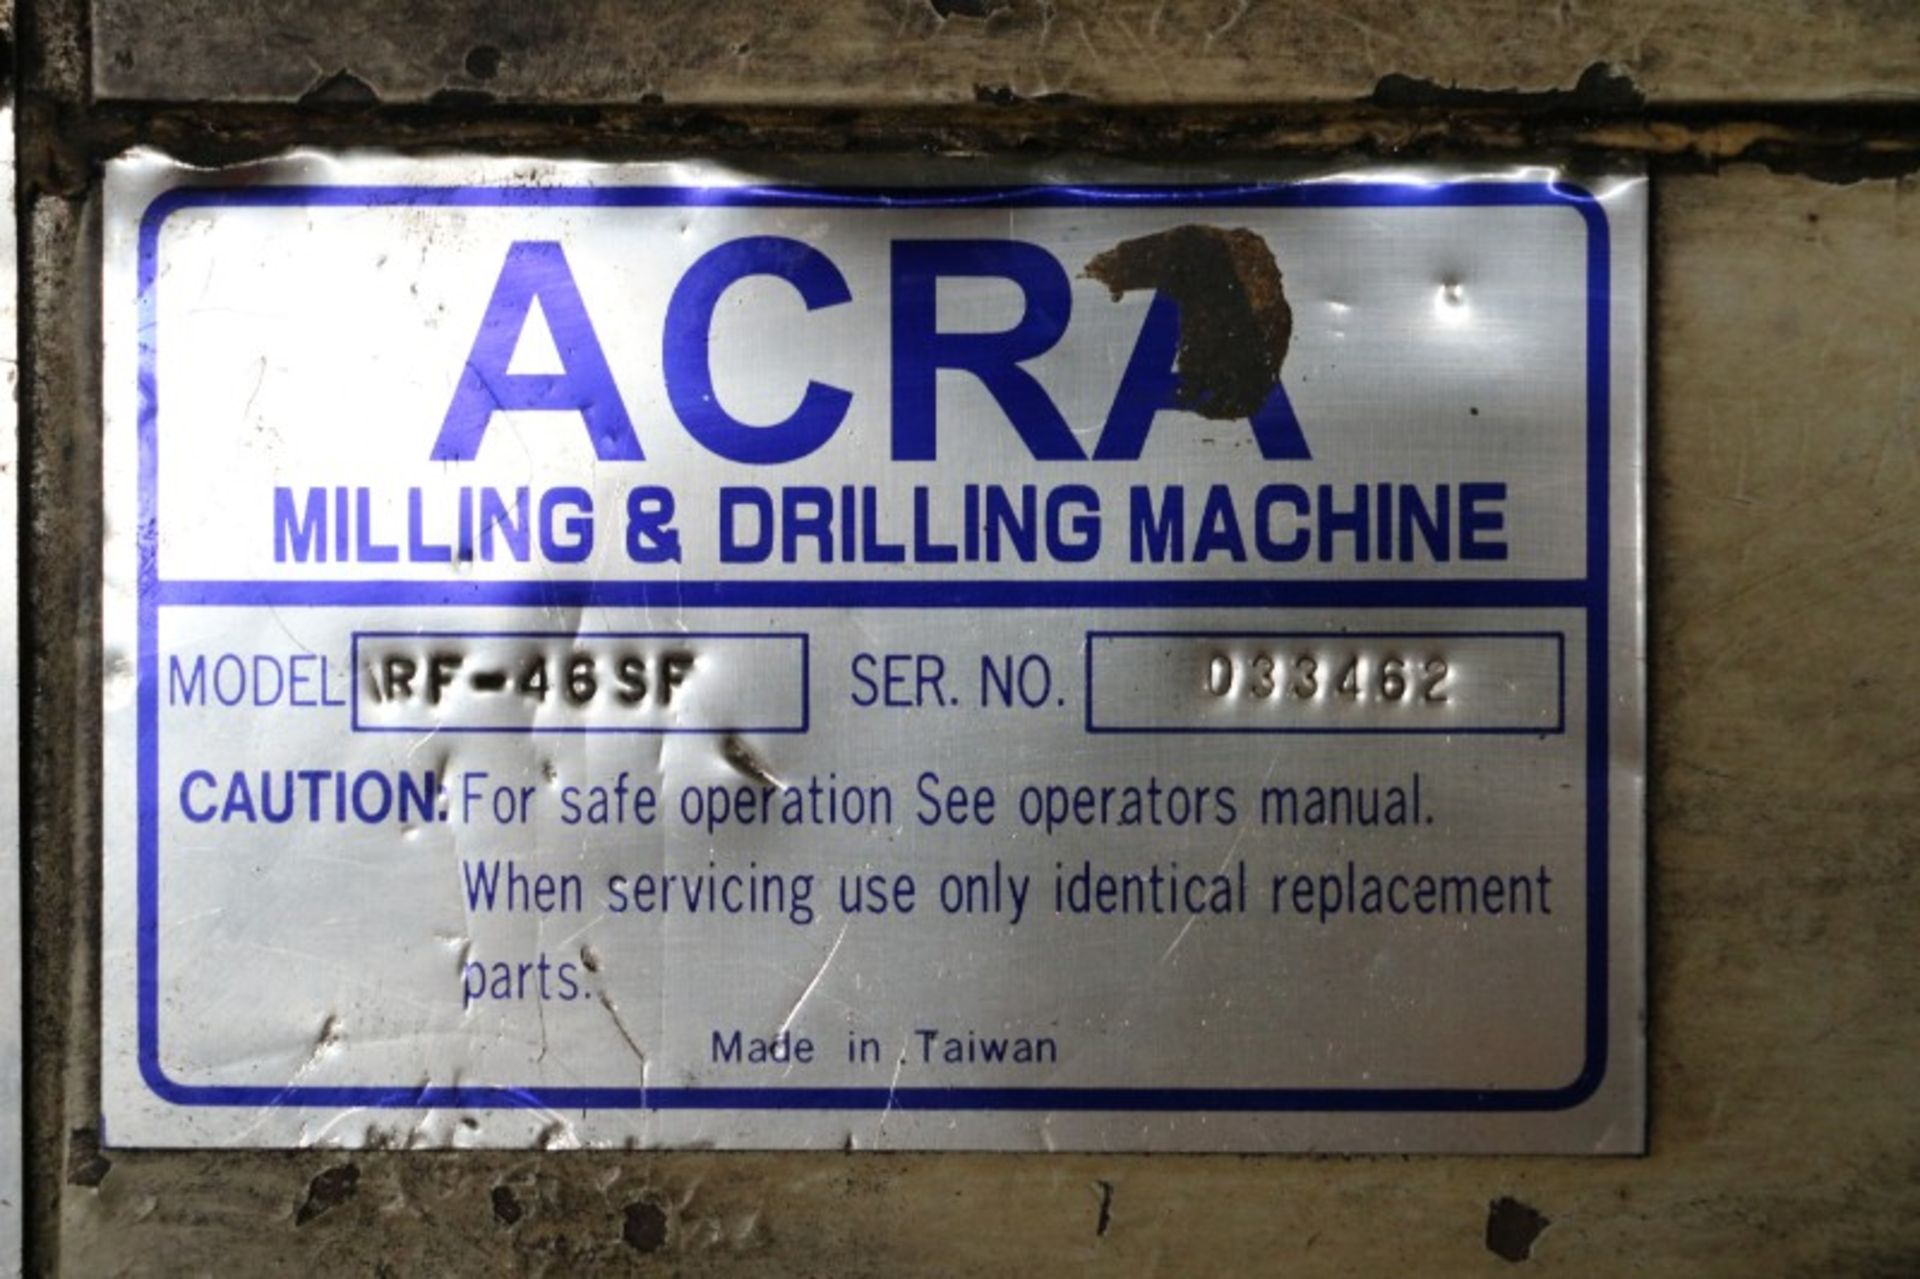 Acra RF-46SF Manual Drill Press, S/N 033462 - Image 6 of 6